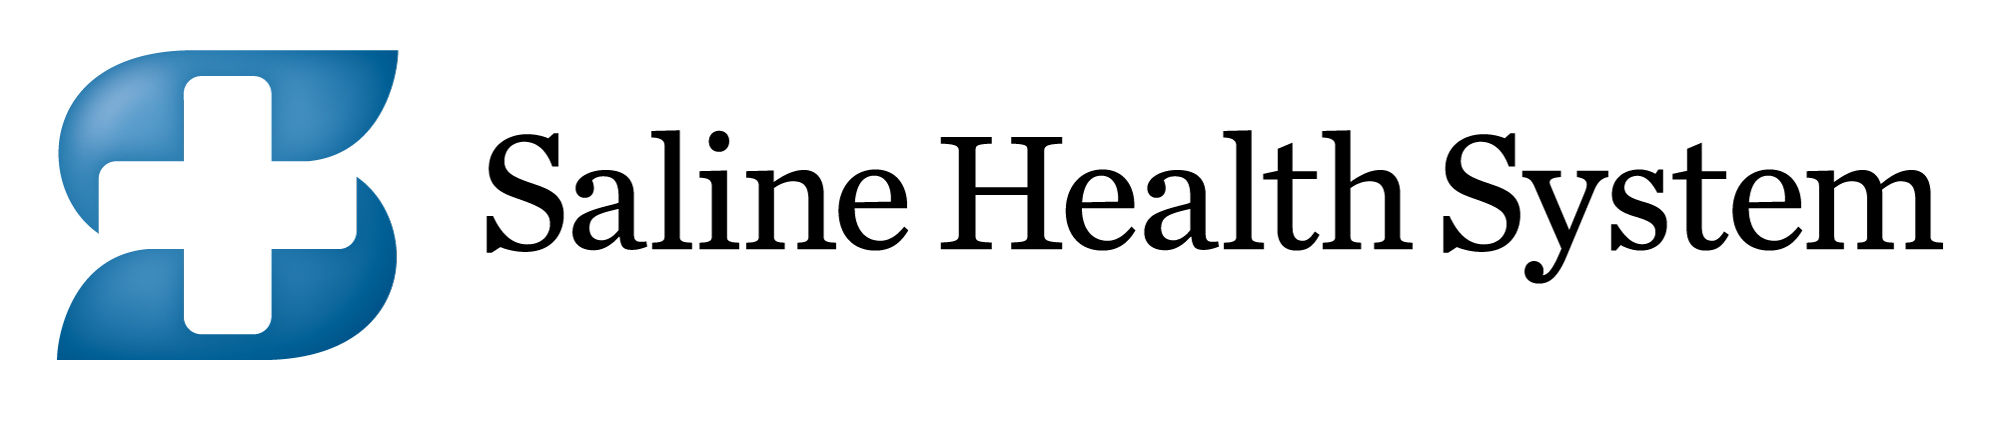 Saline Health System logo